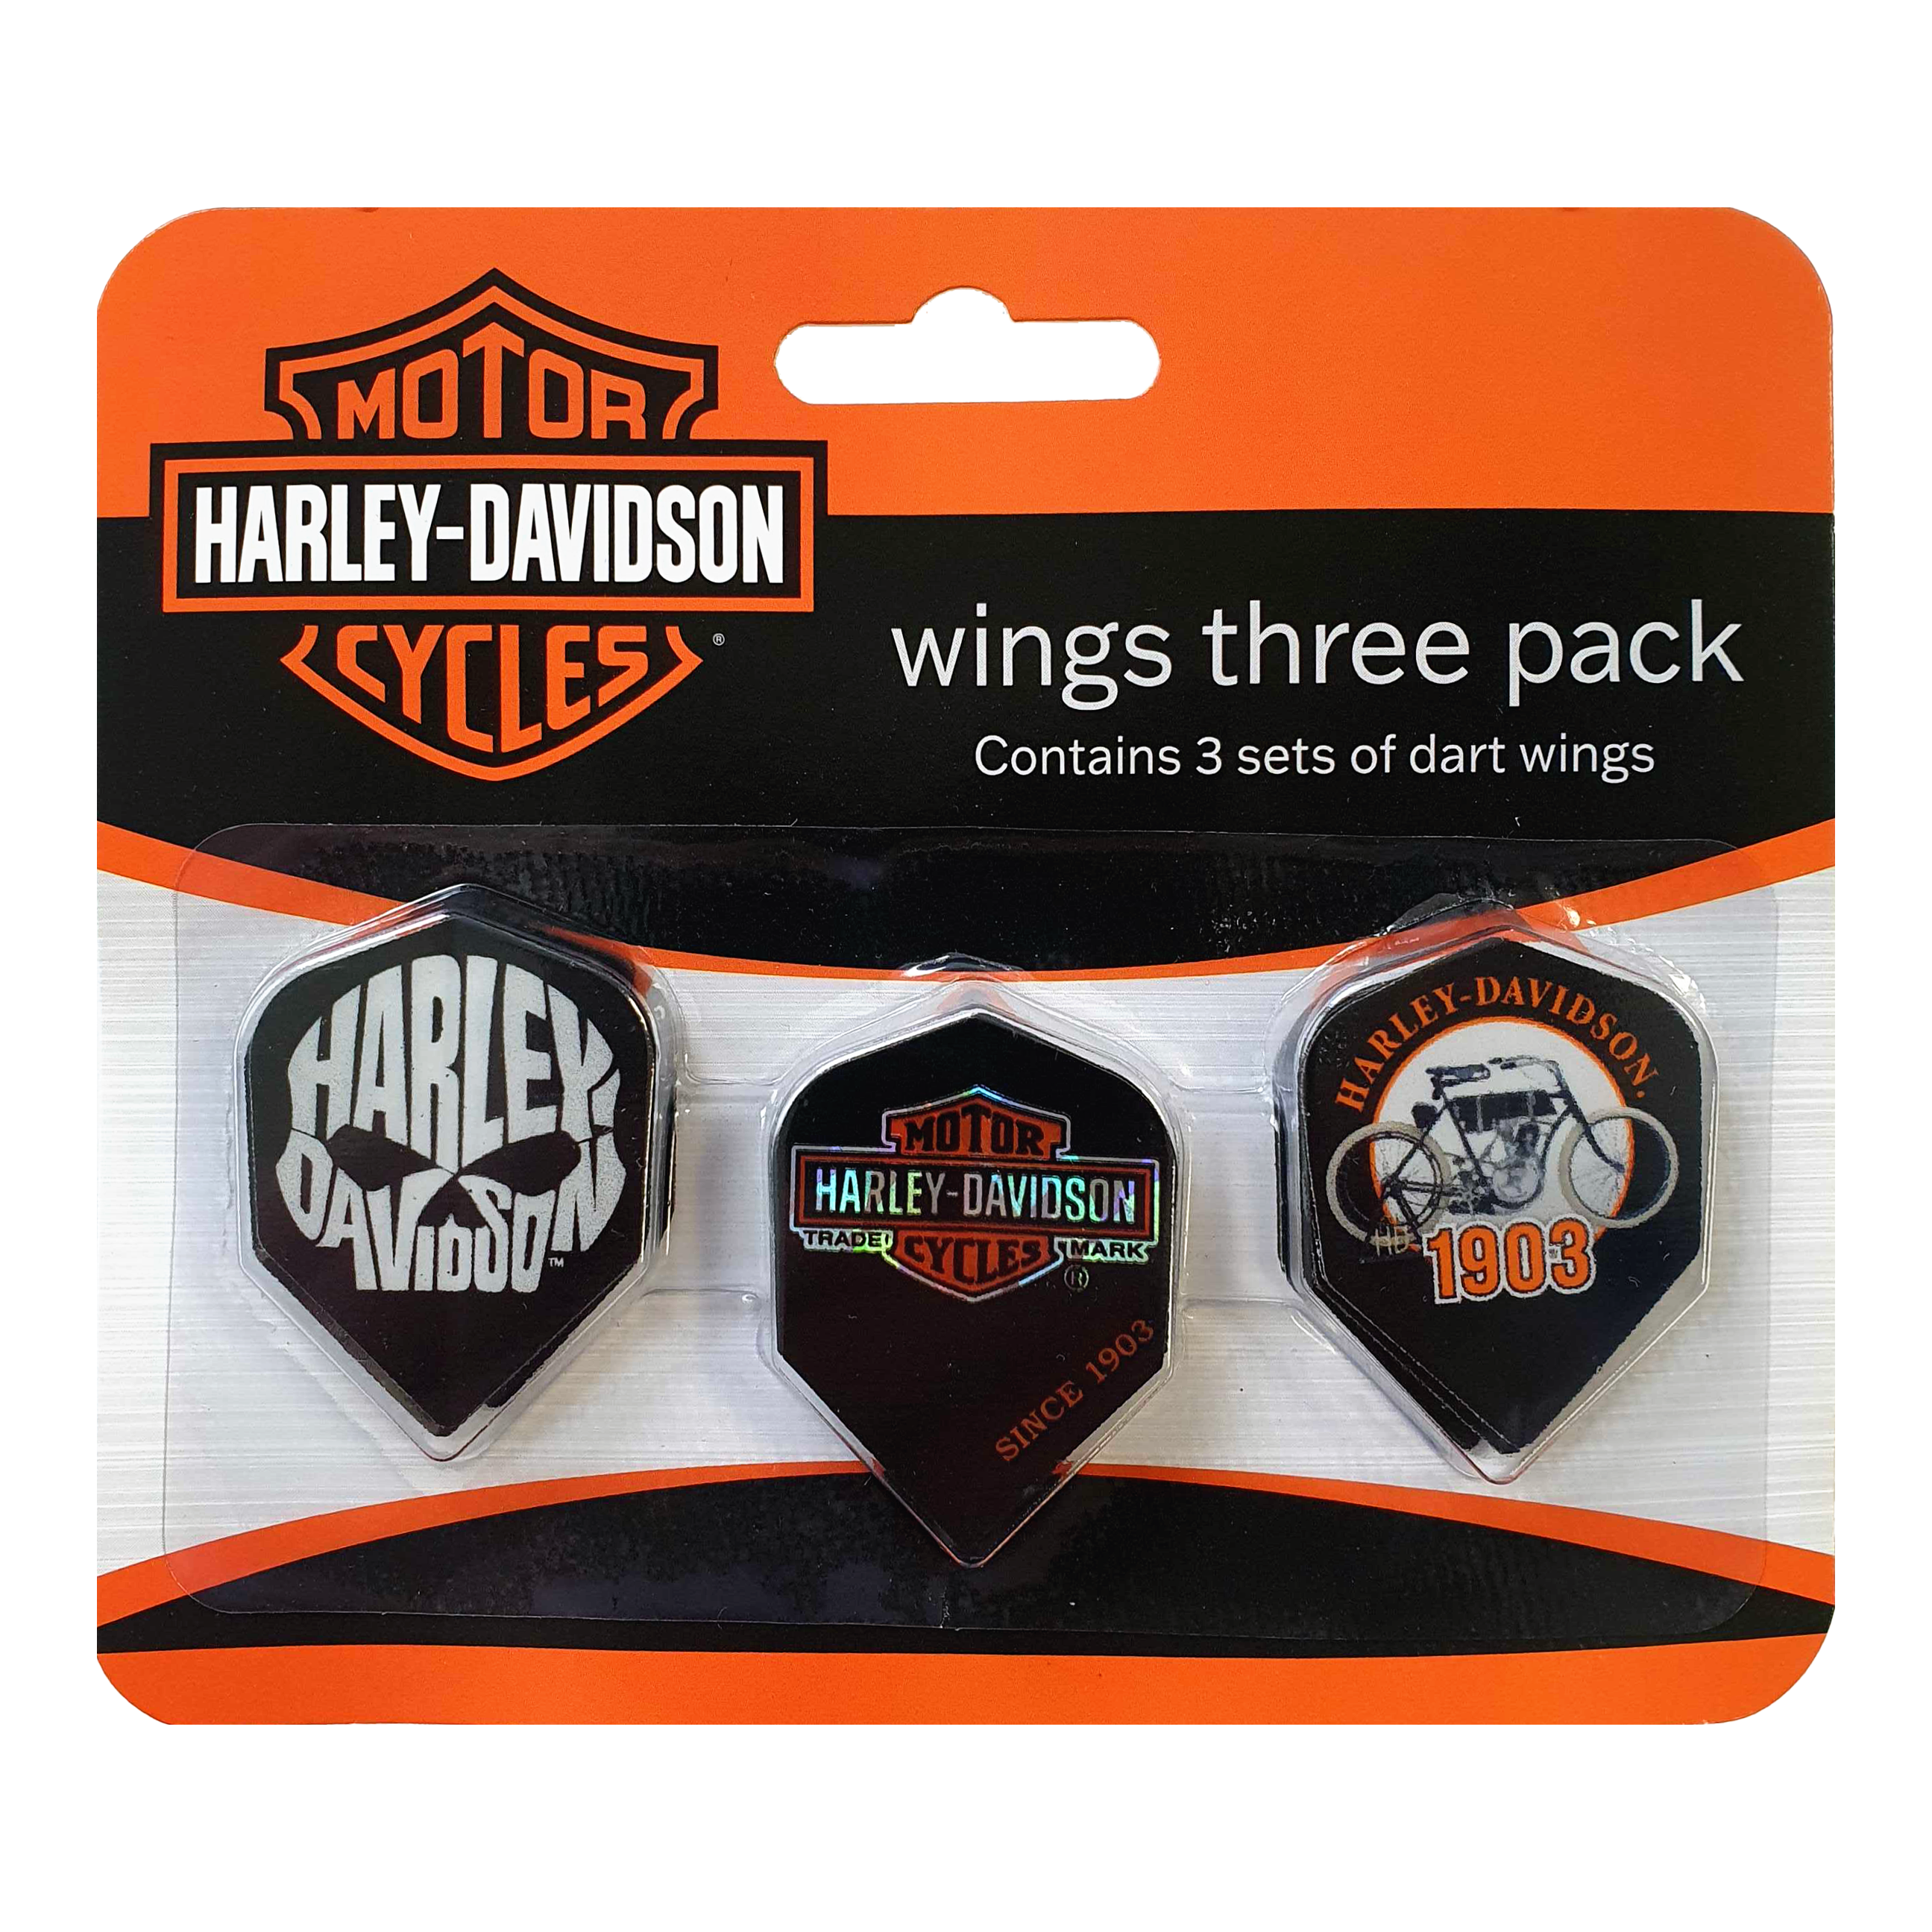 Harley-Davidson Wings No2 Flight Pack